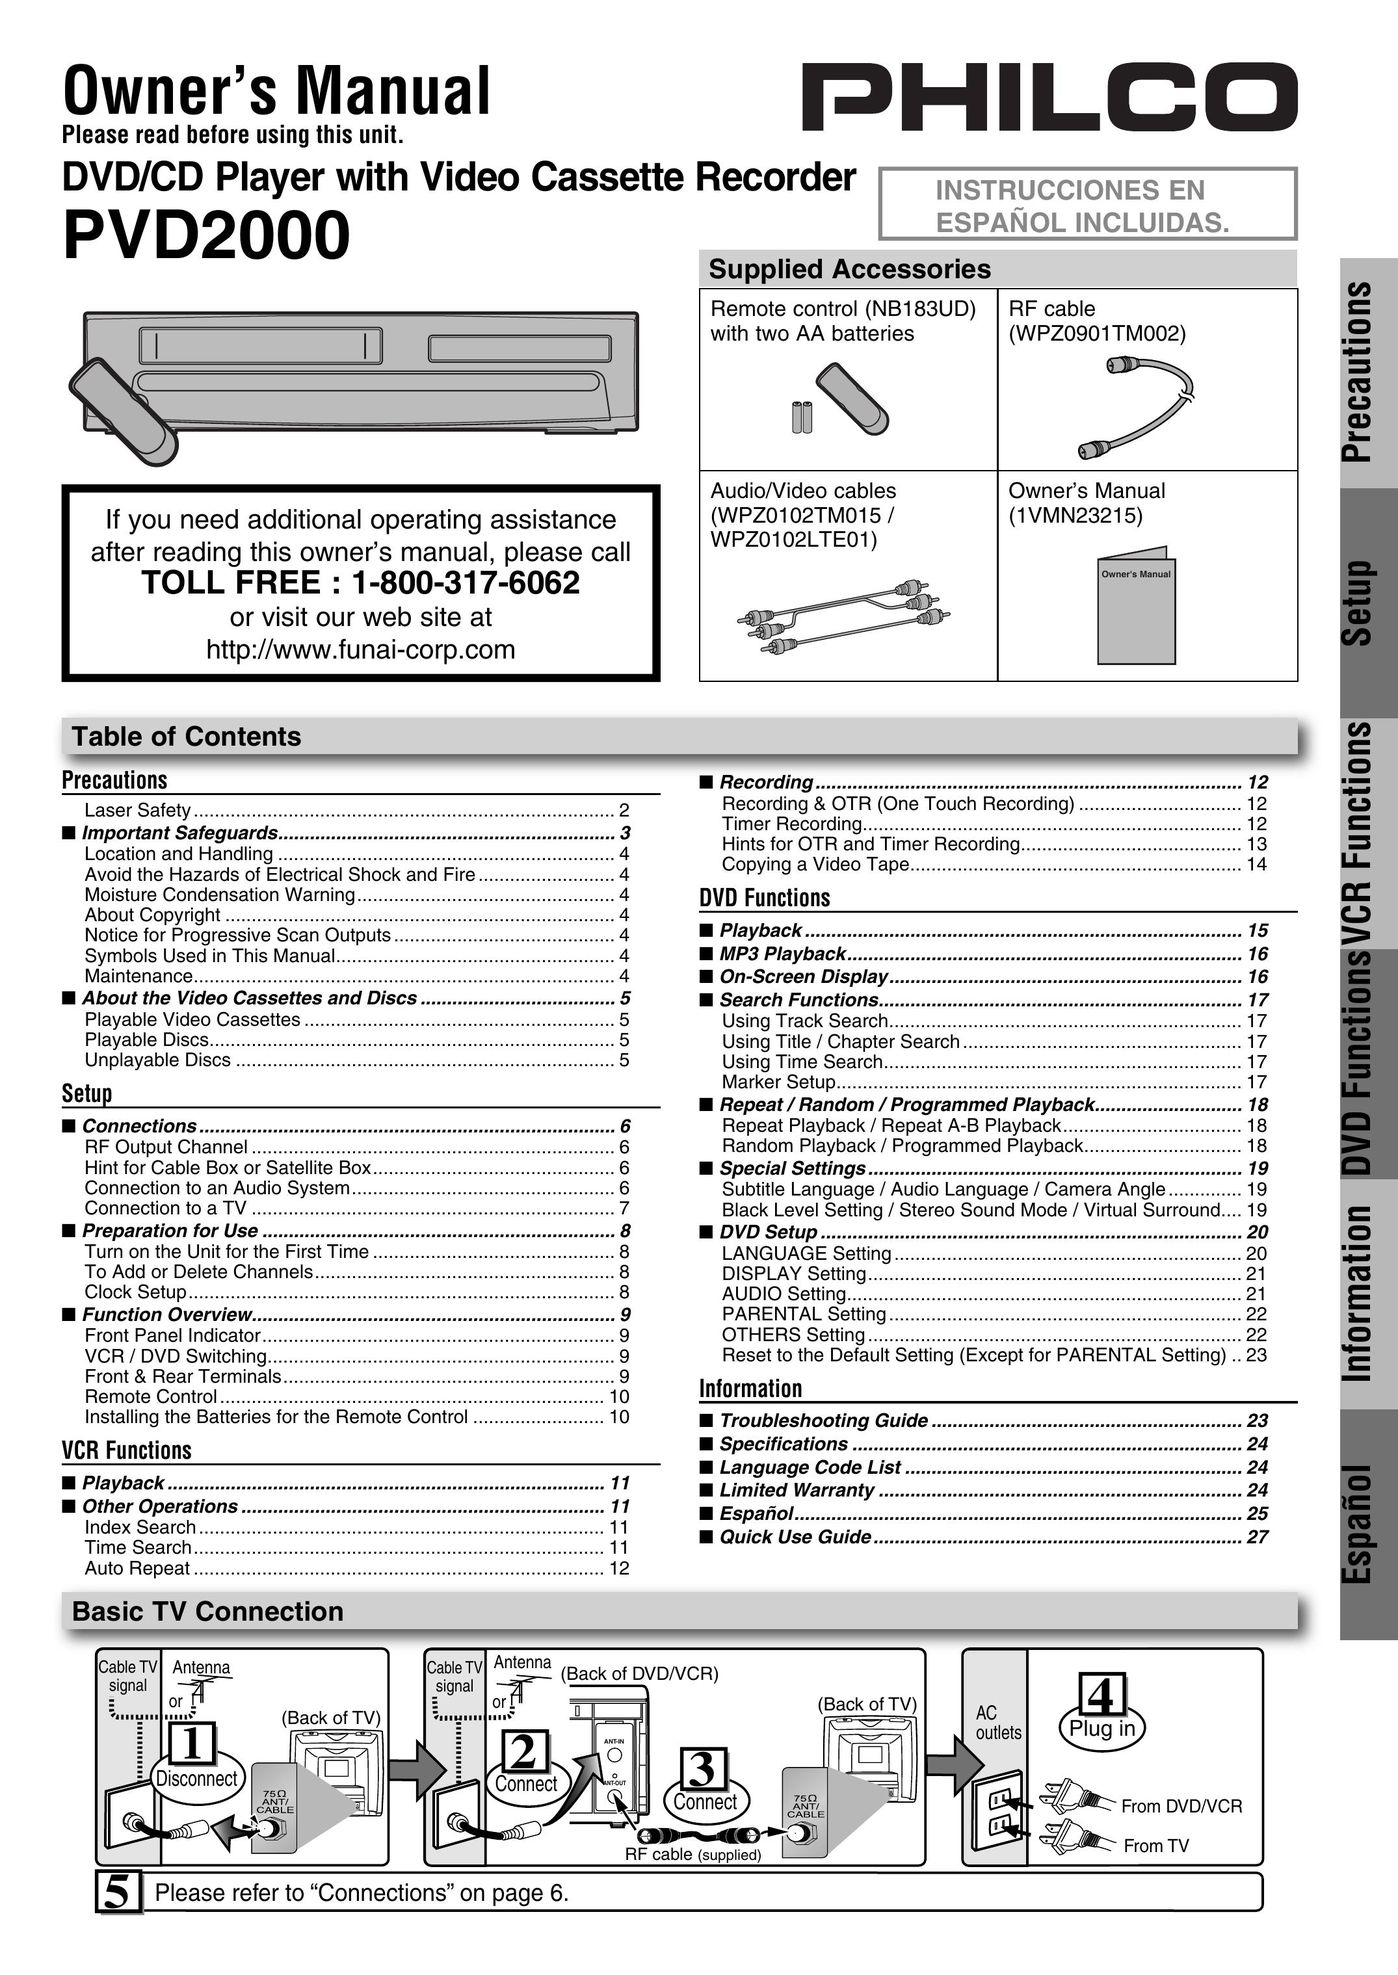 Philco PVD2000 DVD Player User Manual